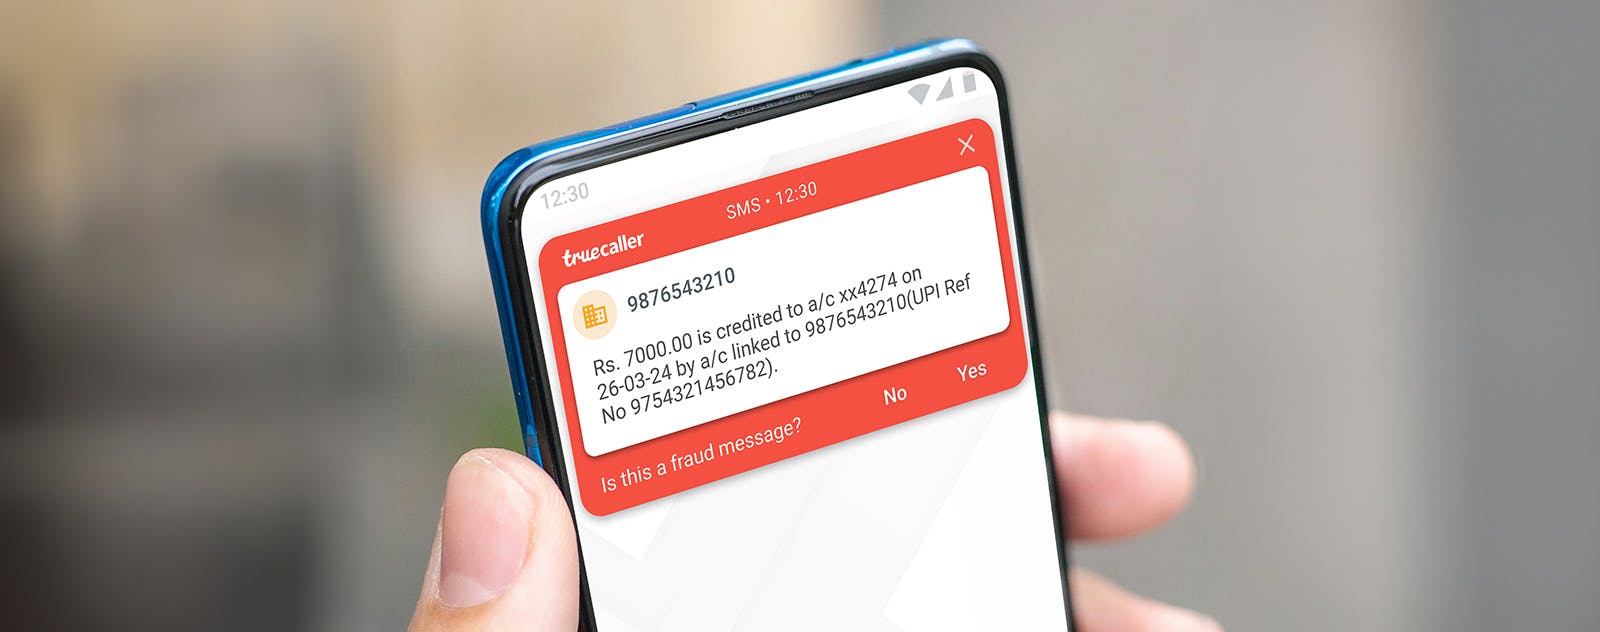 Pantalla de celular mostrando una alerta de mensaje fraudulento